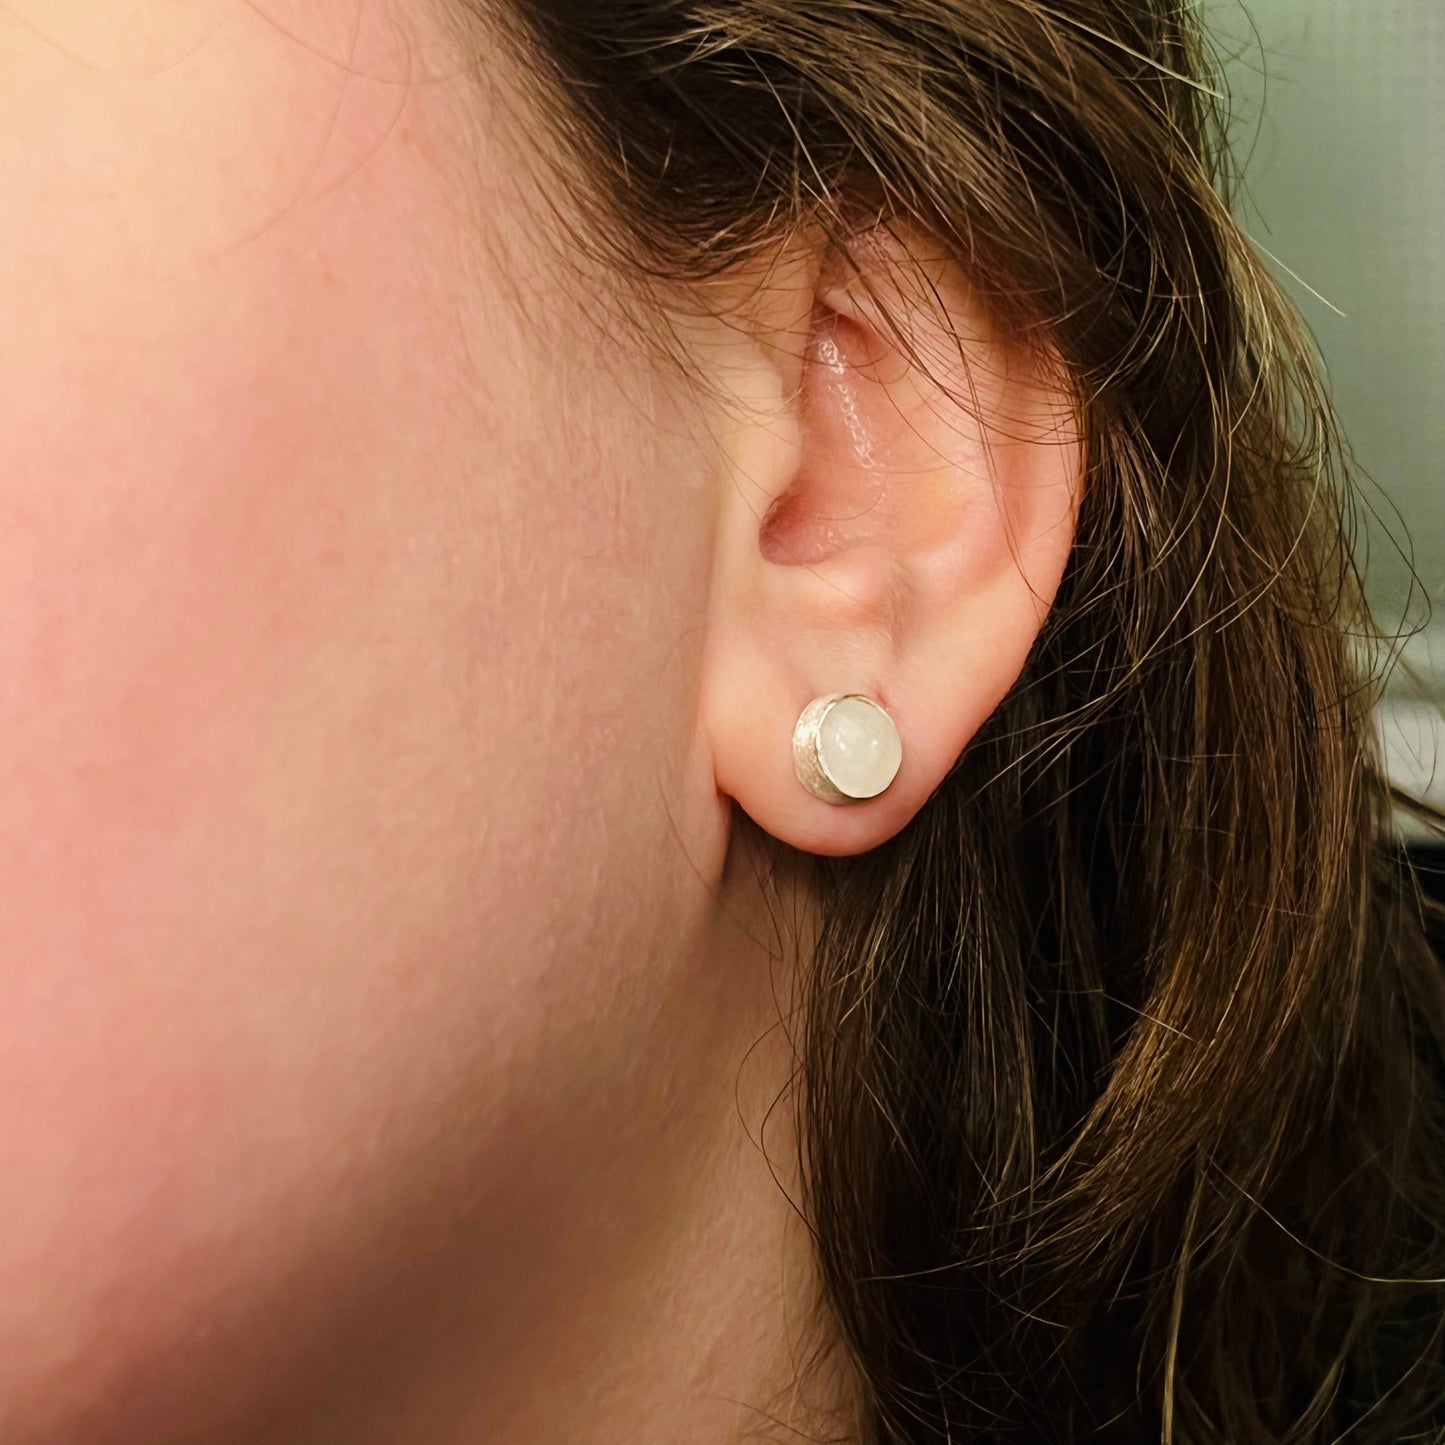 Moonstone Sterling Earrings